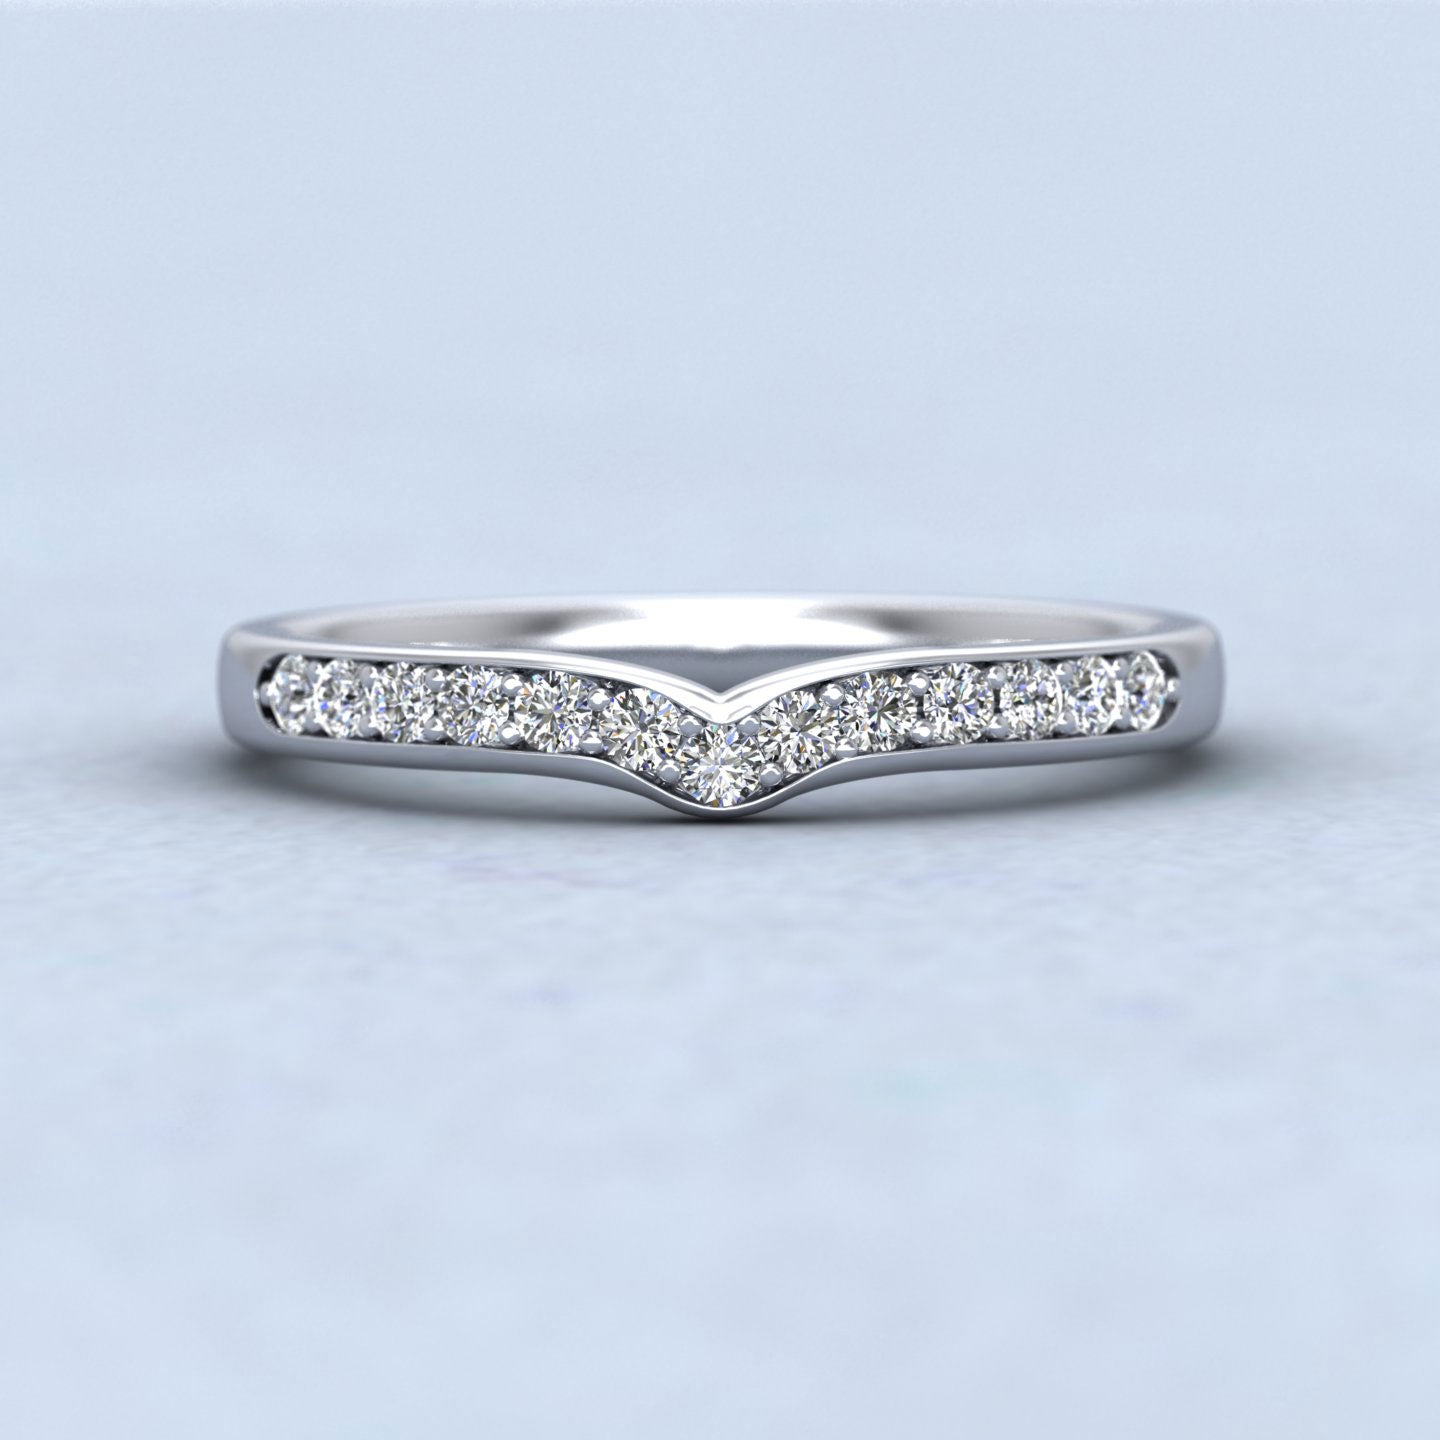 Slight Wishbone Shaped Bead Set Diamond Wedding Ring In 18ct White Gold 2.25mm Wide